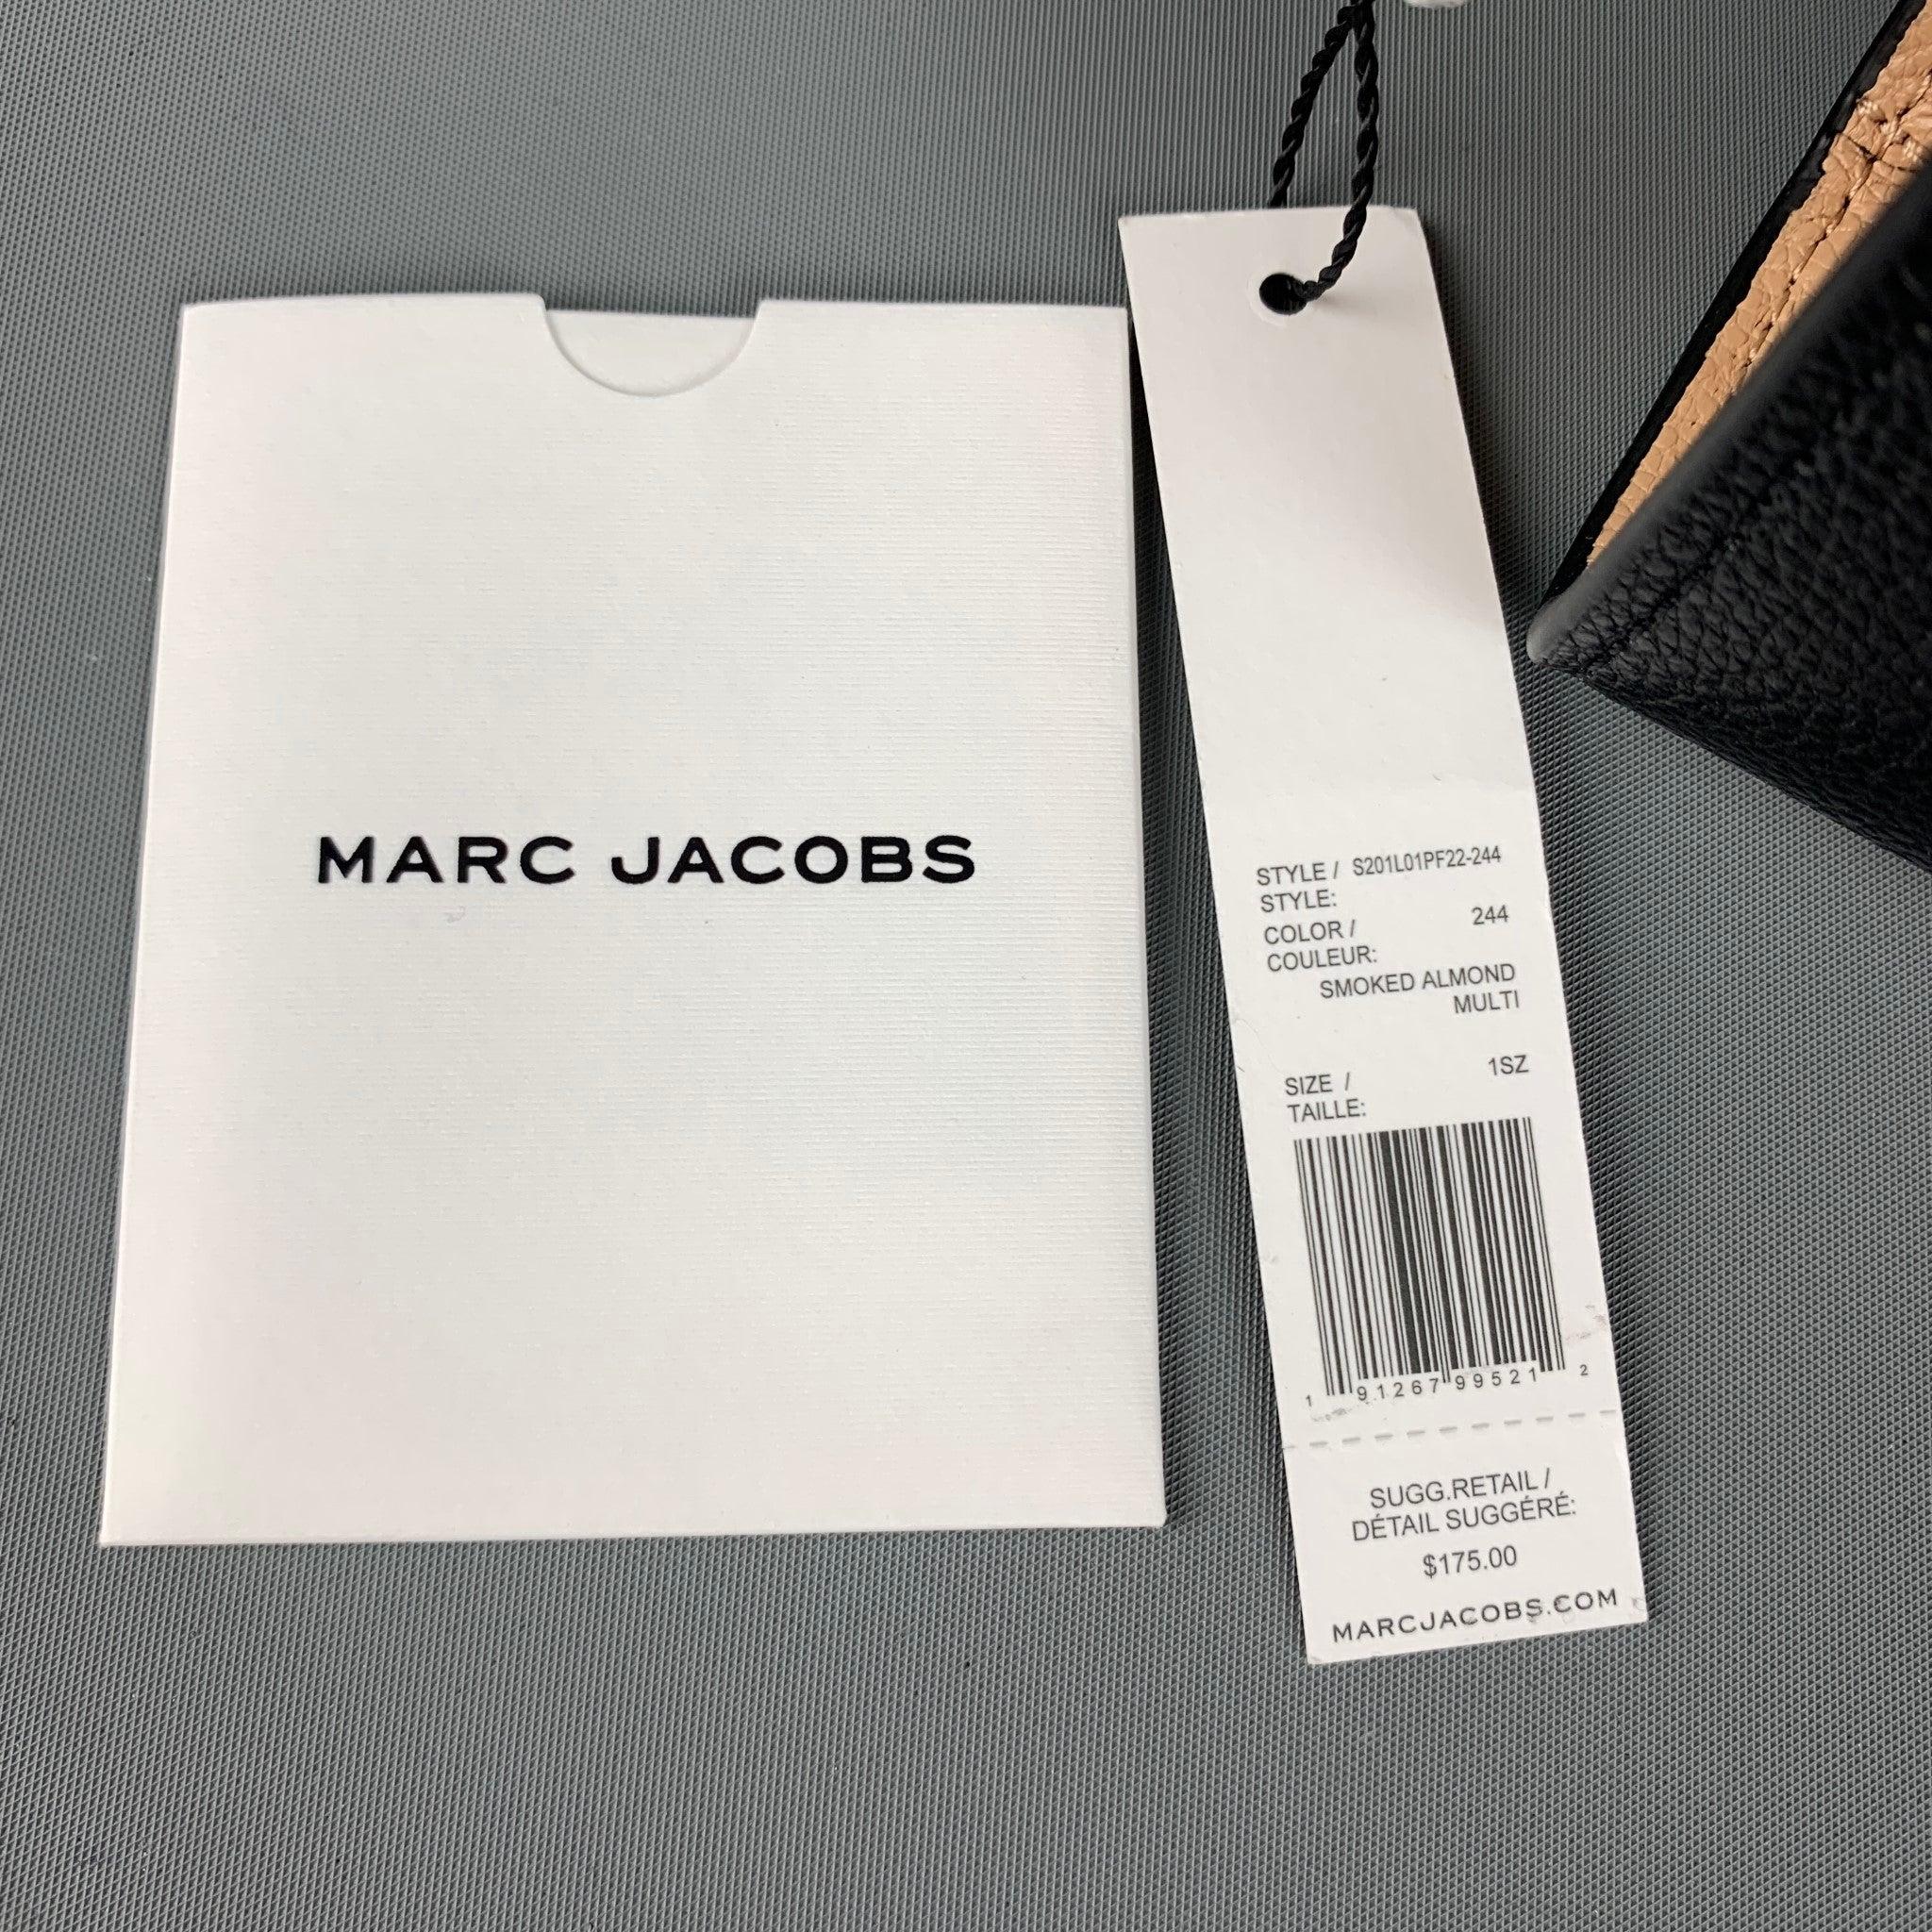 MARC JACOBS Black Tan Color Block Leather Clutch For Sale 3